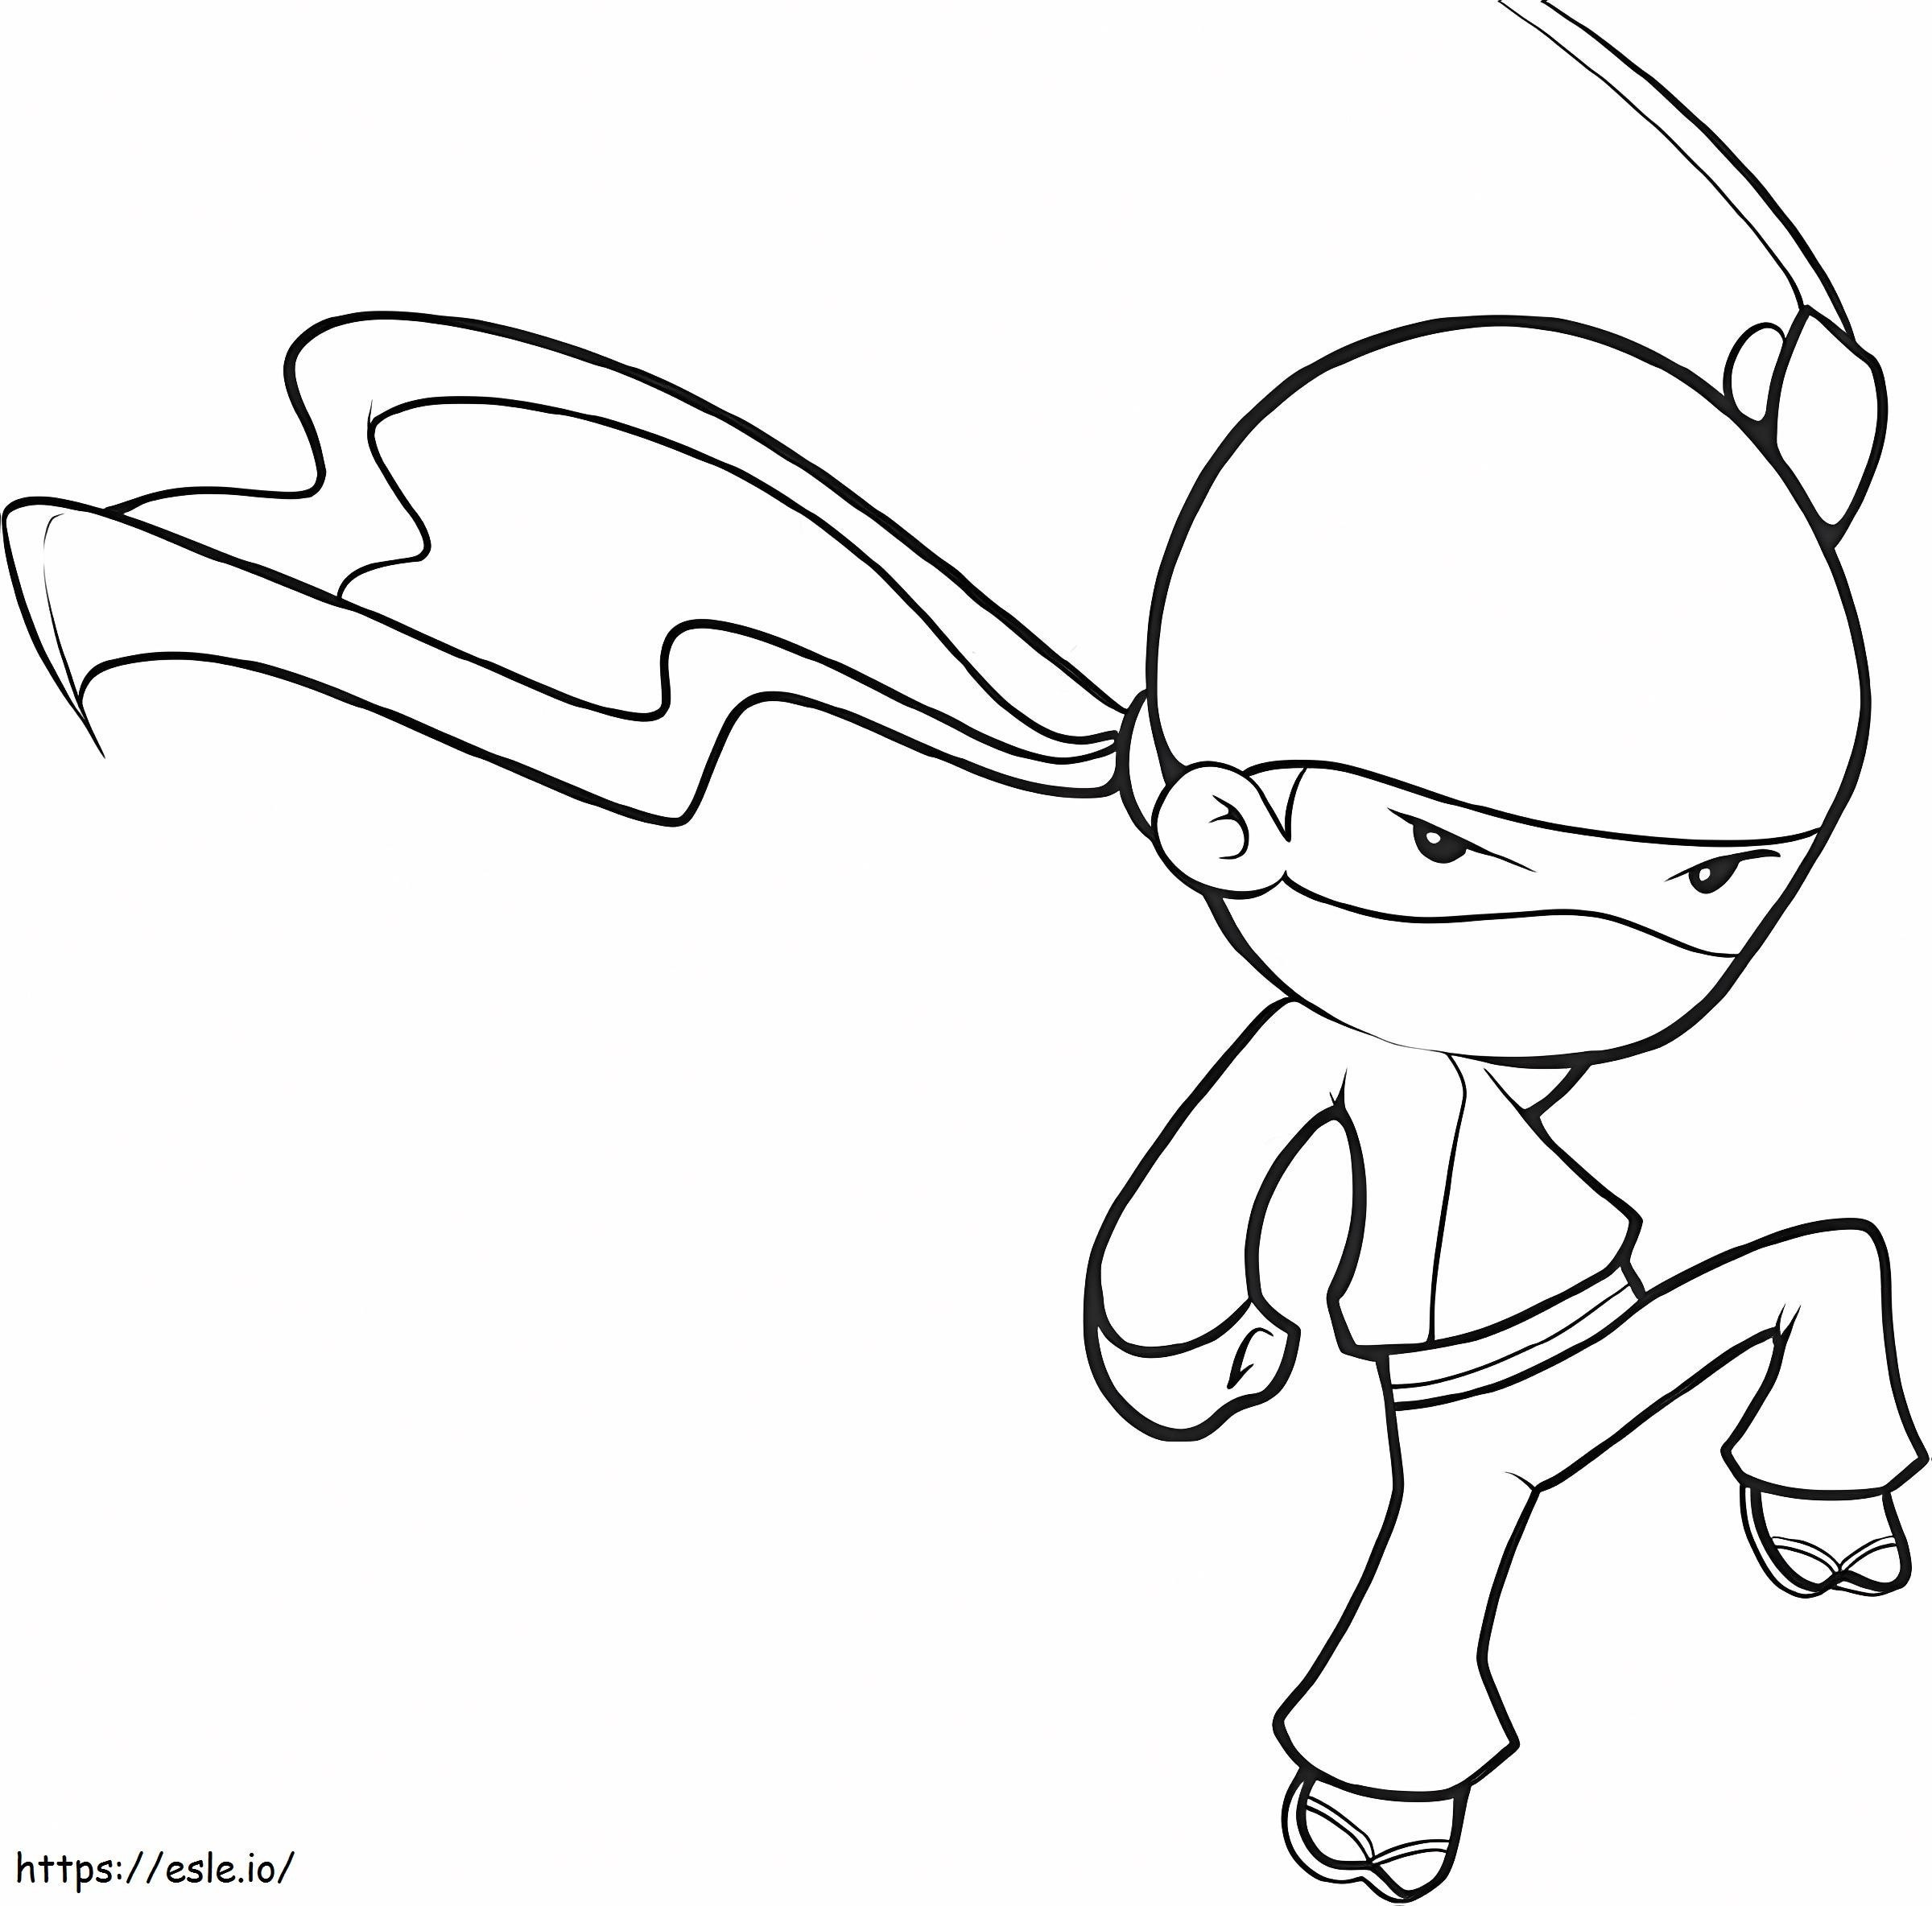 Coloriage Ninja 1 à imprimer dessin